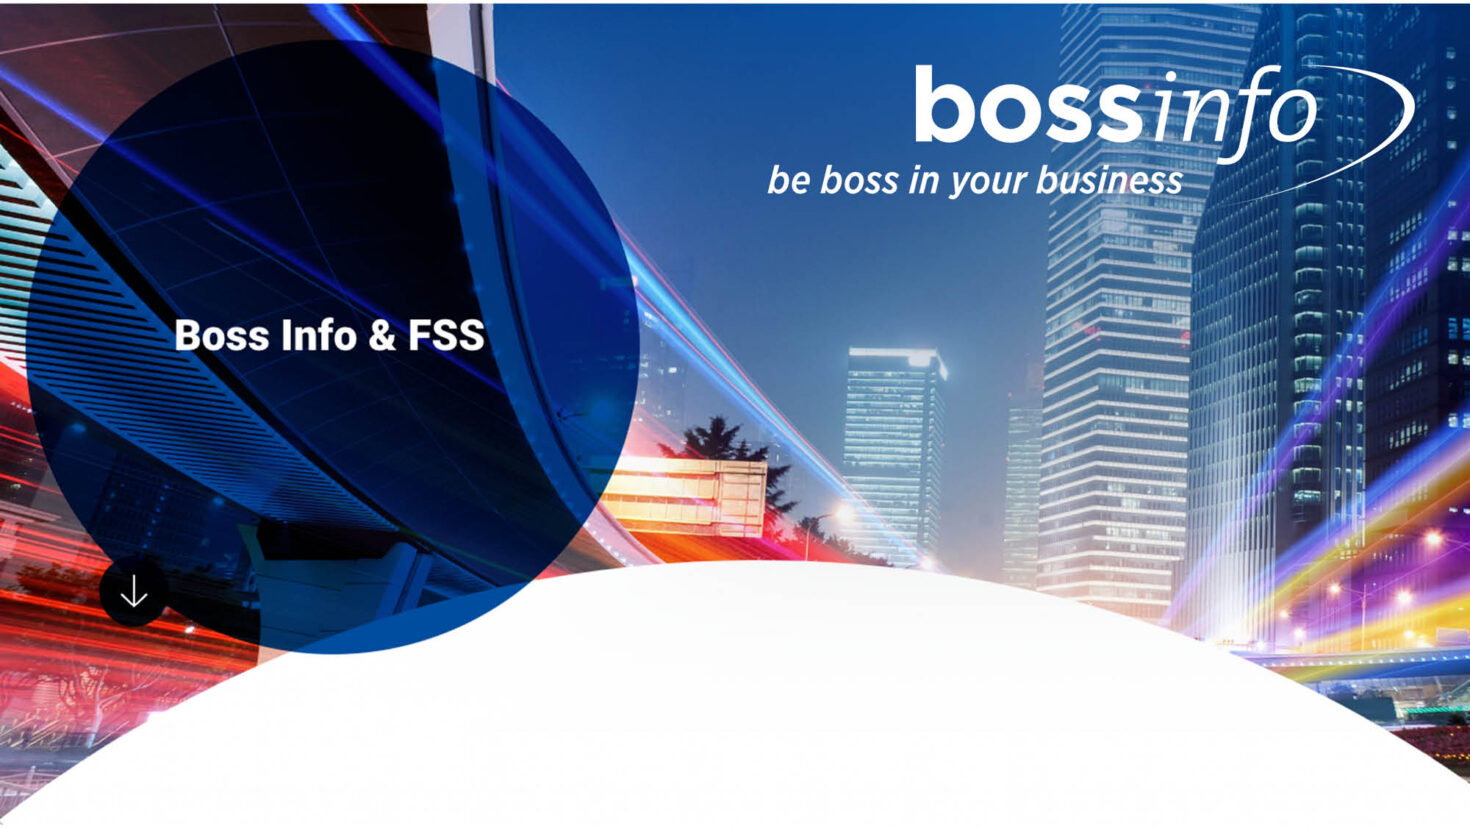 Die Firma Full Speed Systems ist neu integriert in die Boss Info